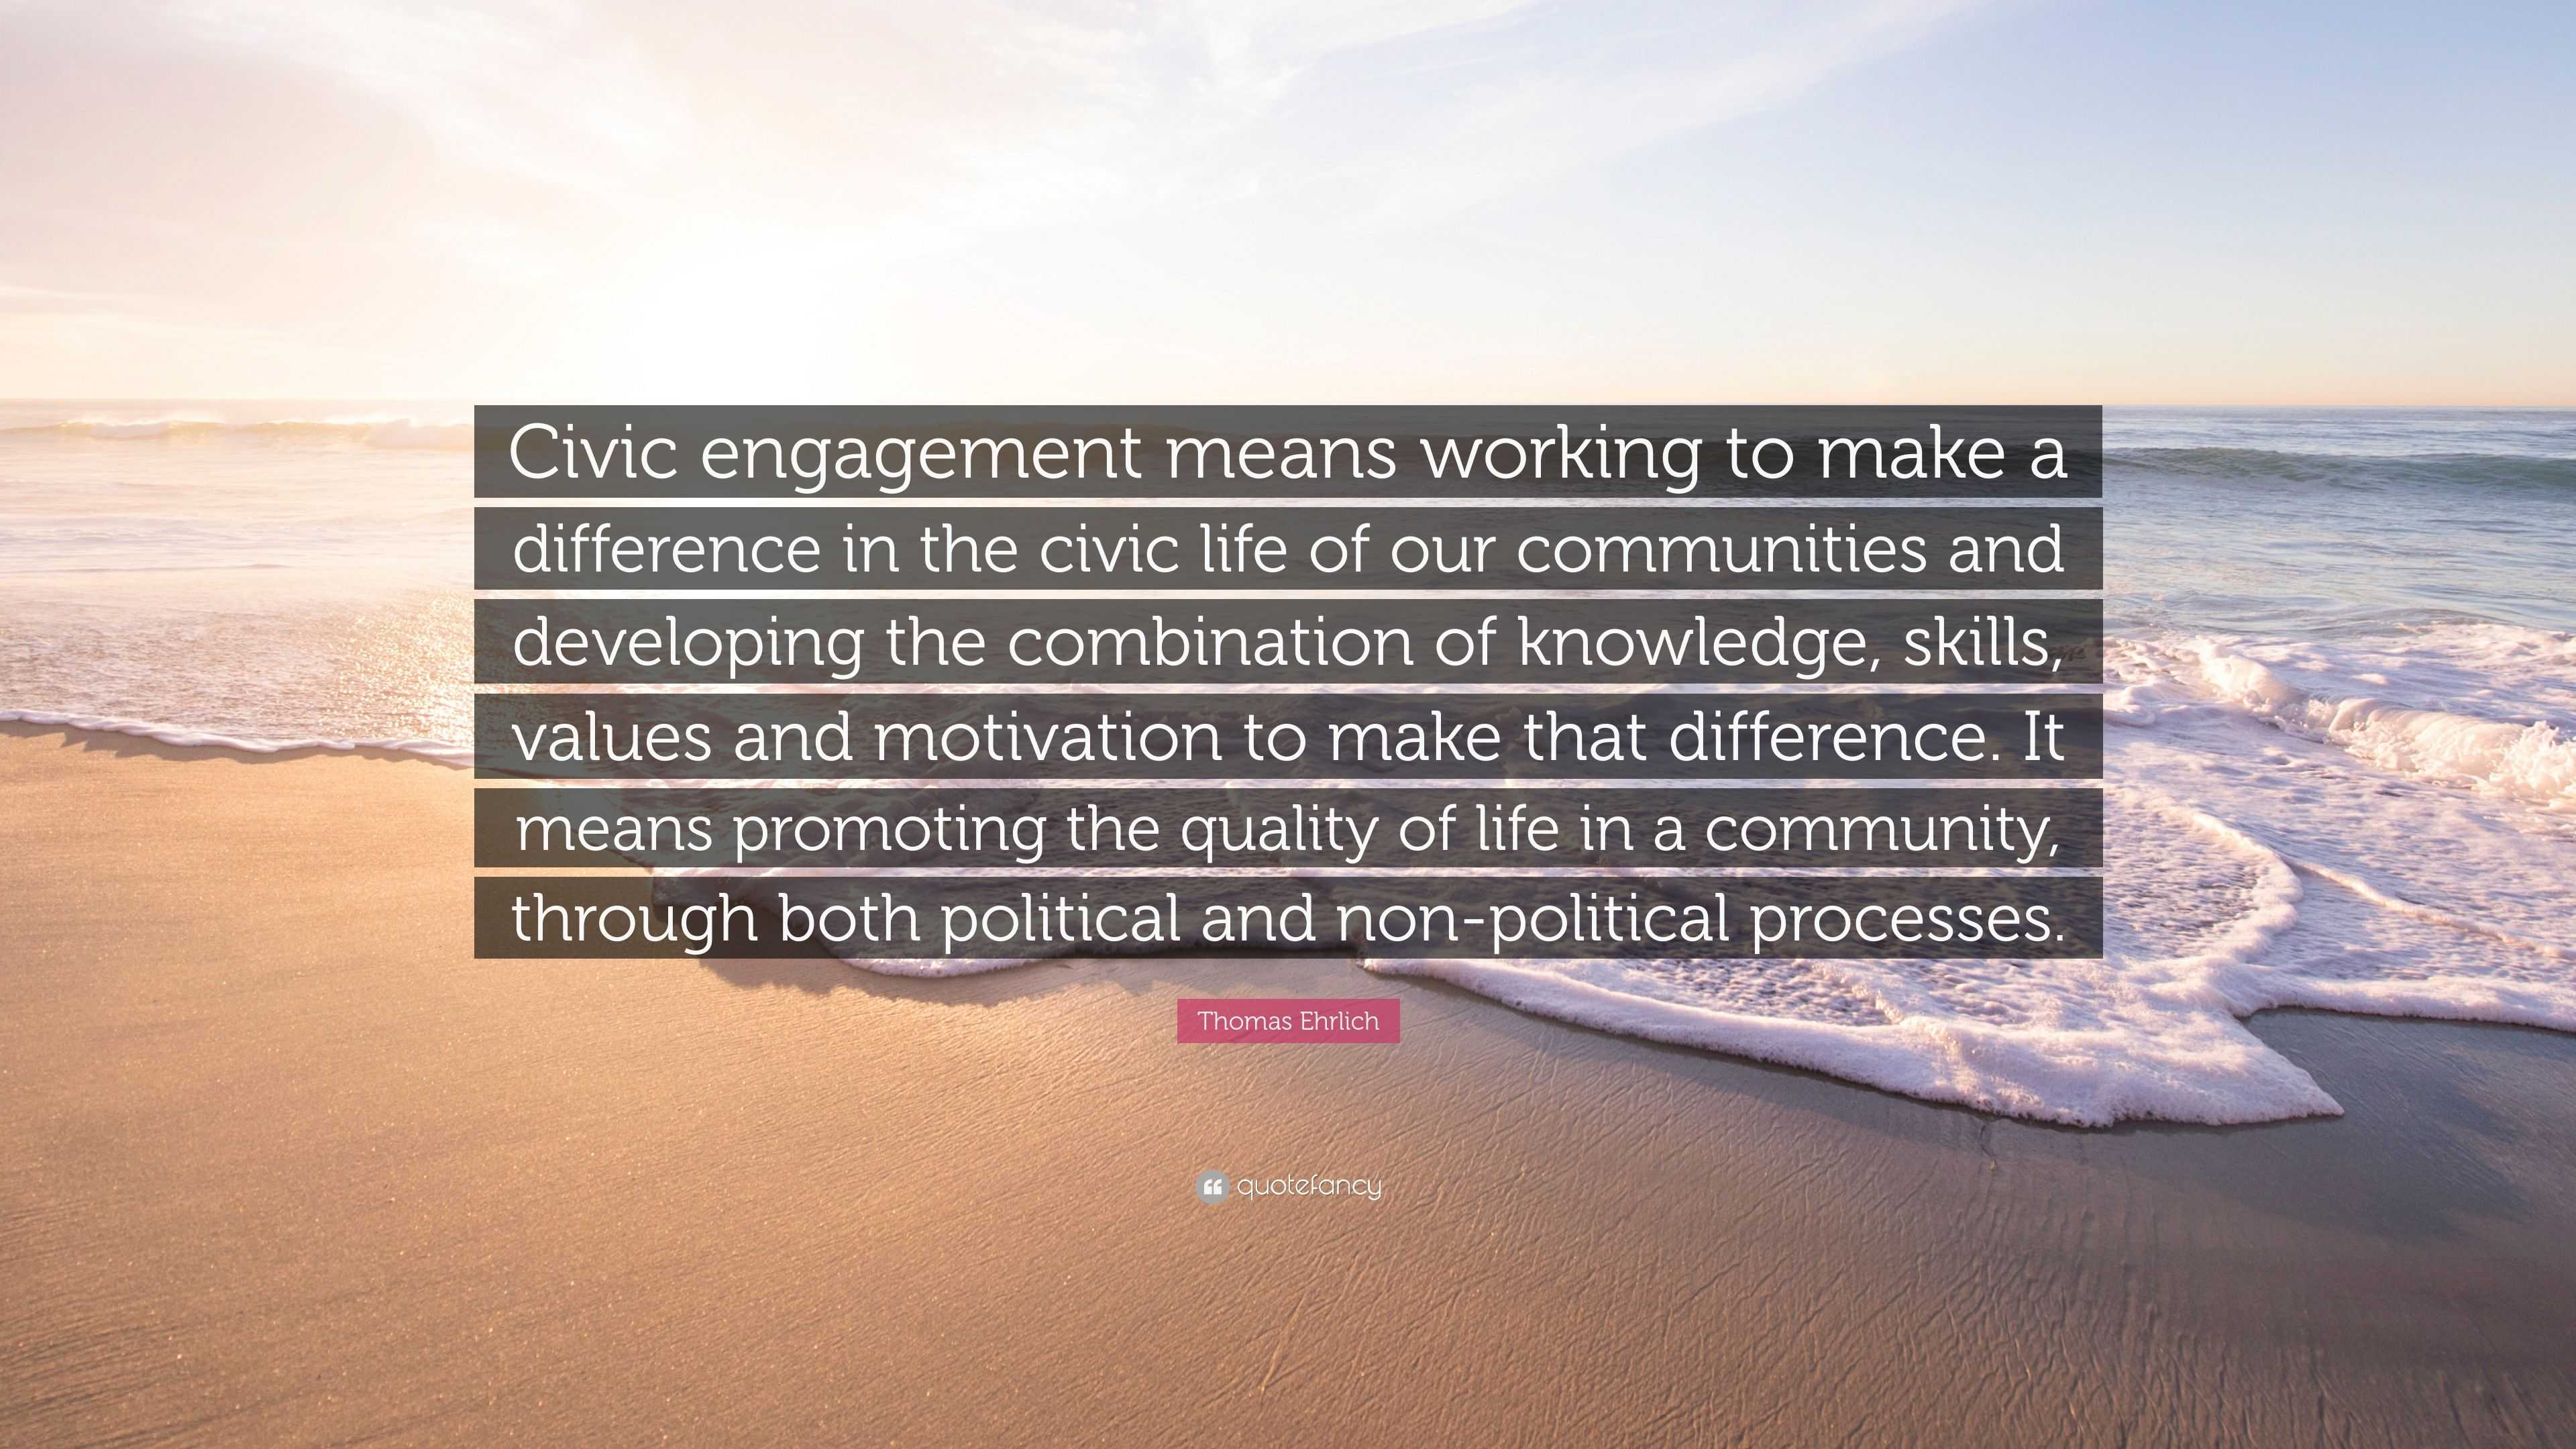 reflective essay on civic engagement